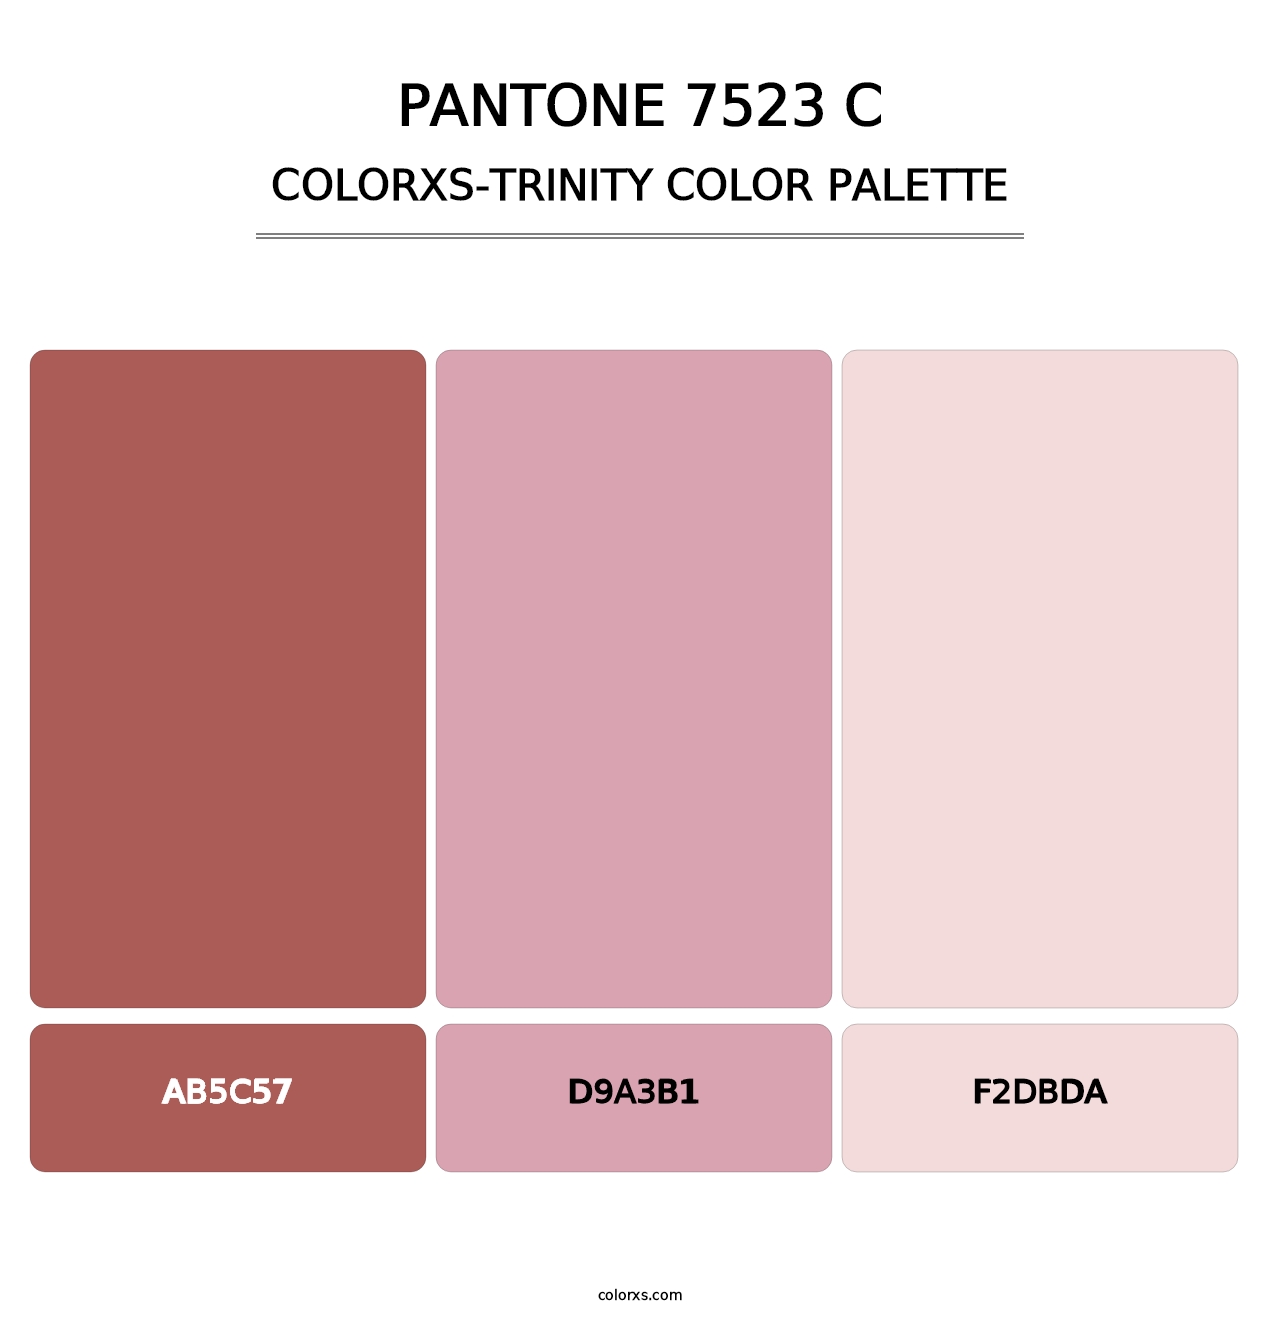 PANTONE 7523 C - Colorxs Trinity Palette